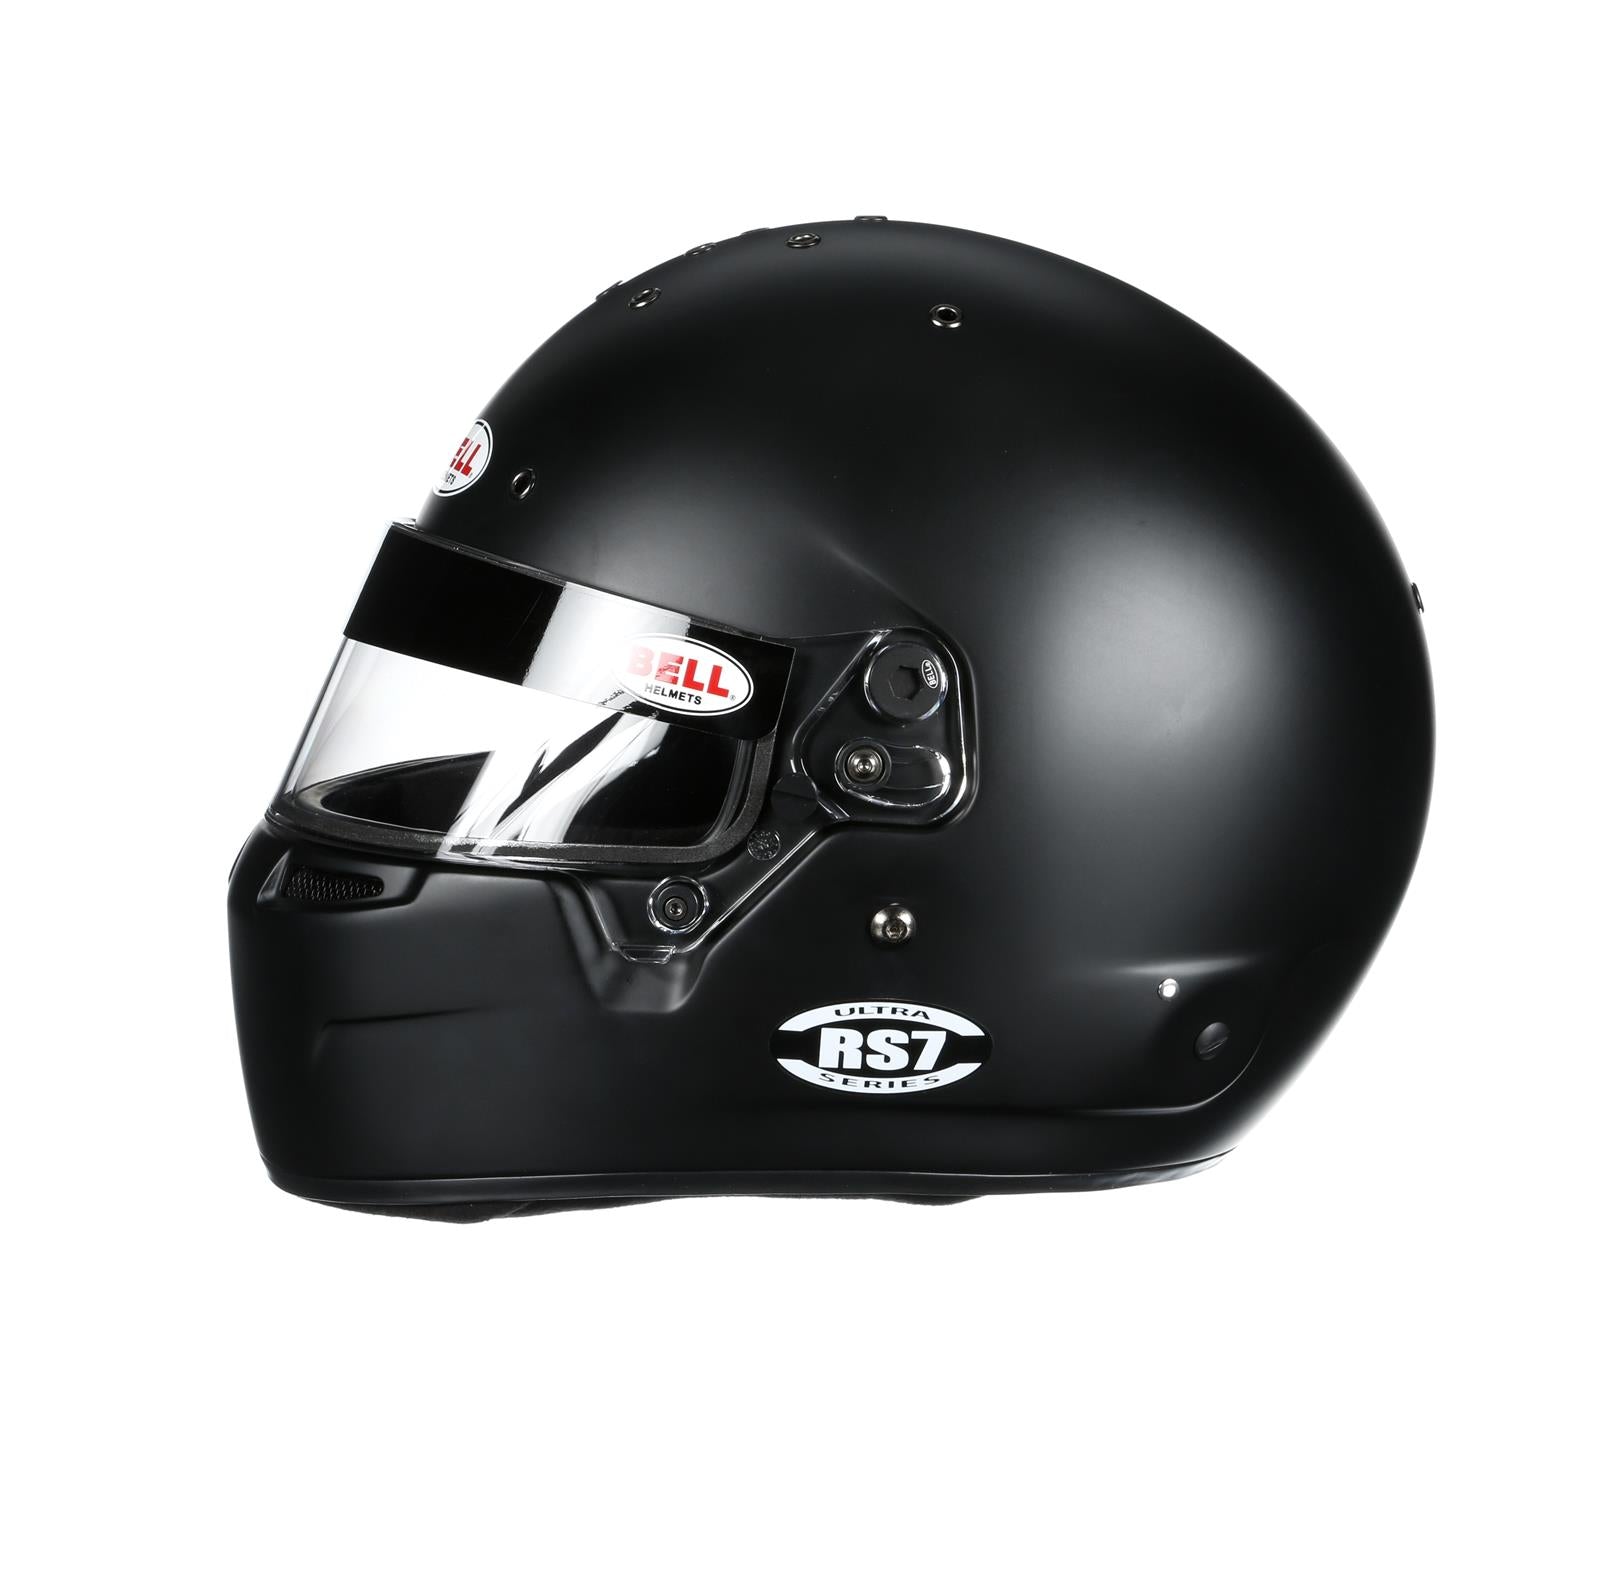 BELL 1310019 Racing helmet RS7 MATTE BLACK, SA2015/FIA8859, HANS, size 61+ (7 5/8+) Photo-2 